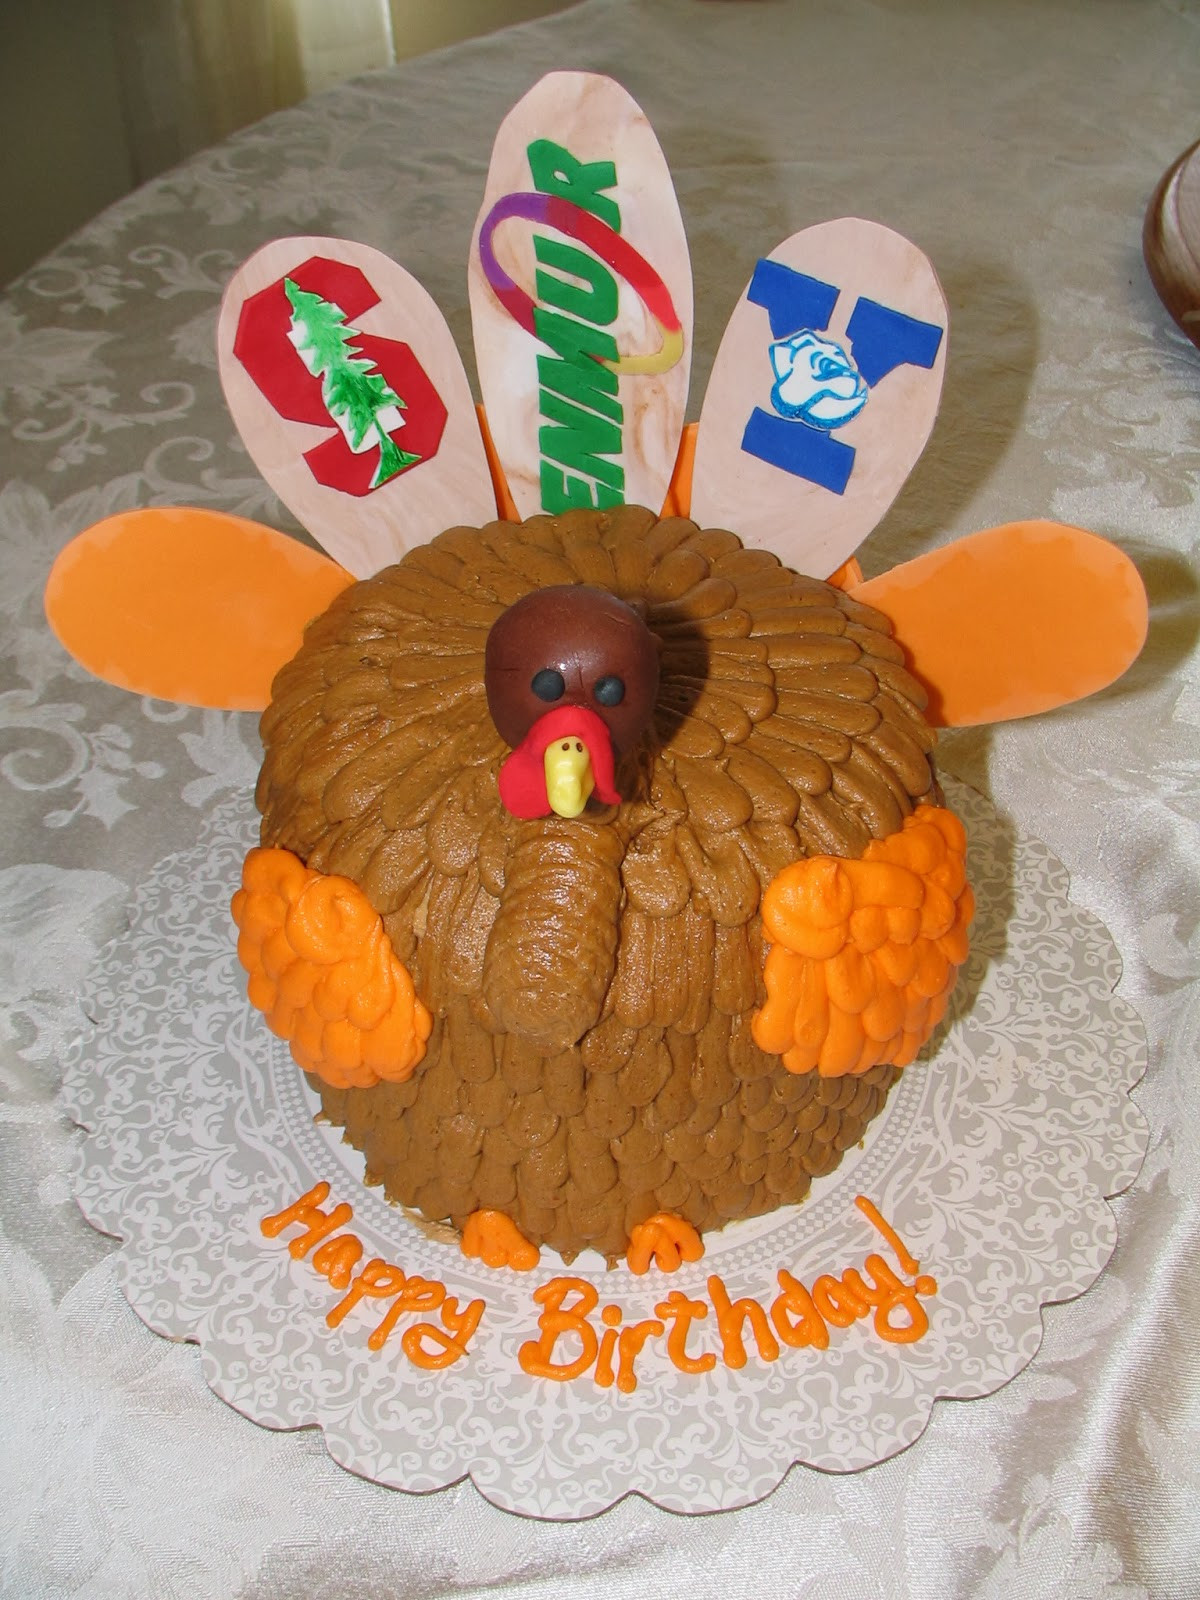 Turkey Birthday Cake
 Piped Dreams Thanksgiving Themed Birthday Cake